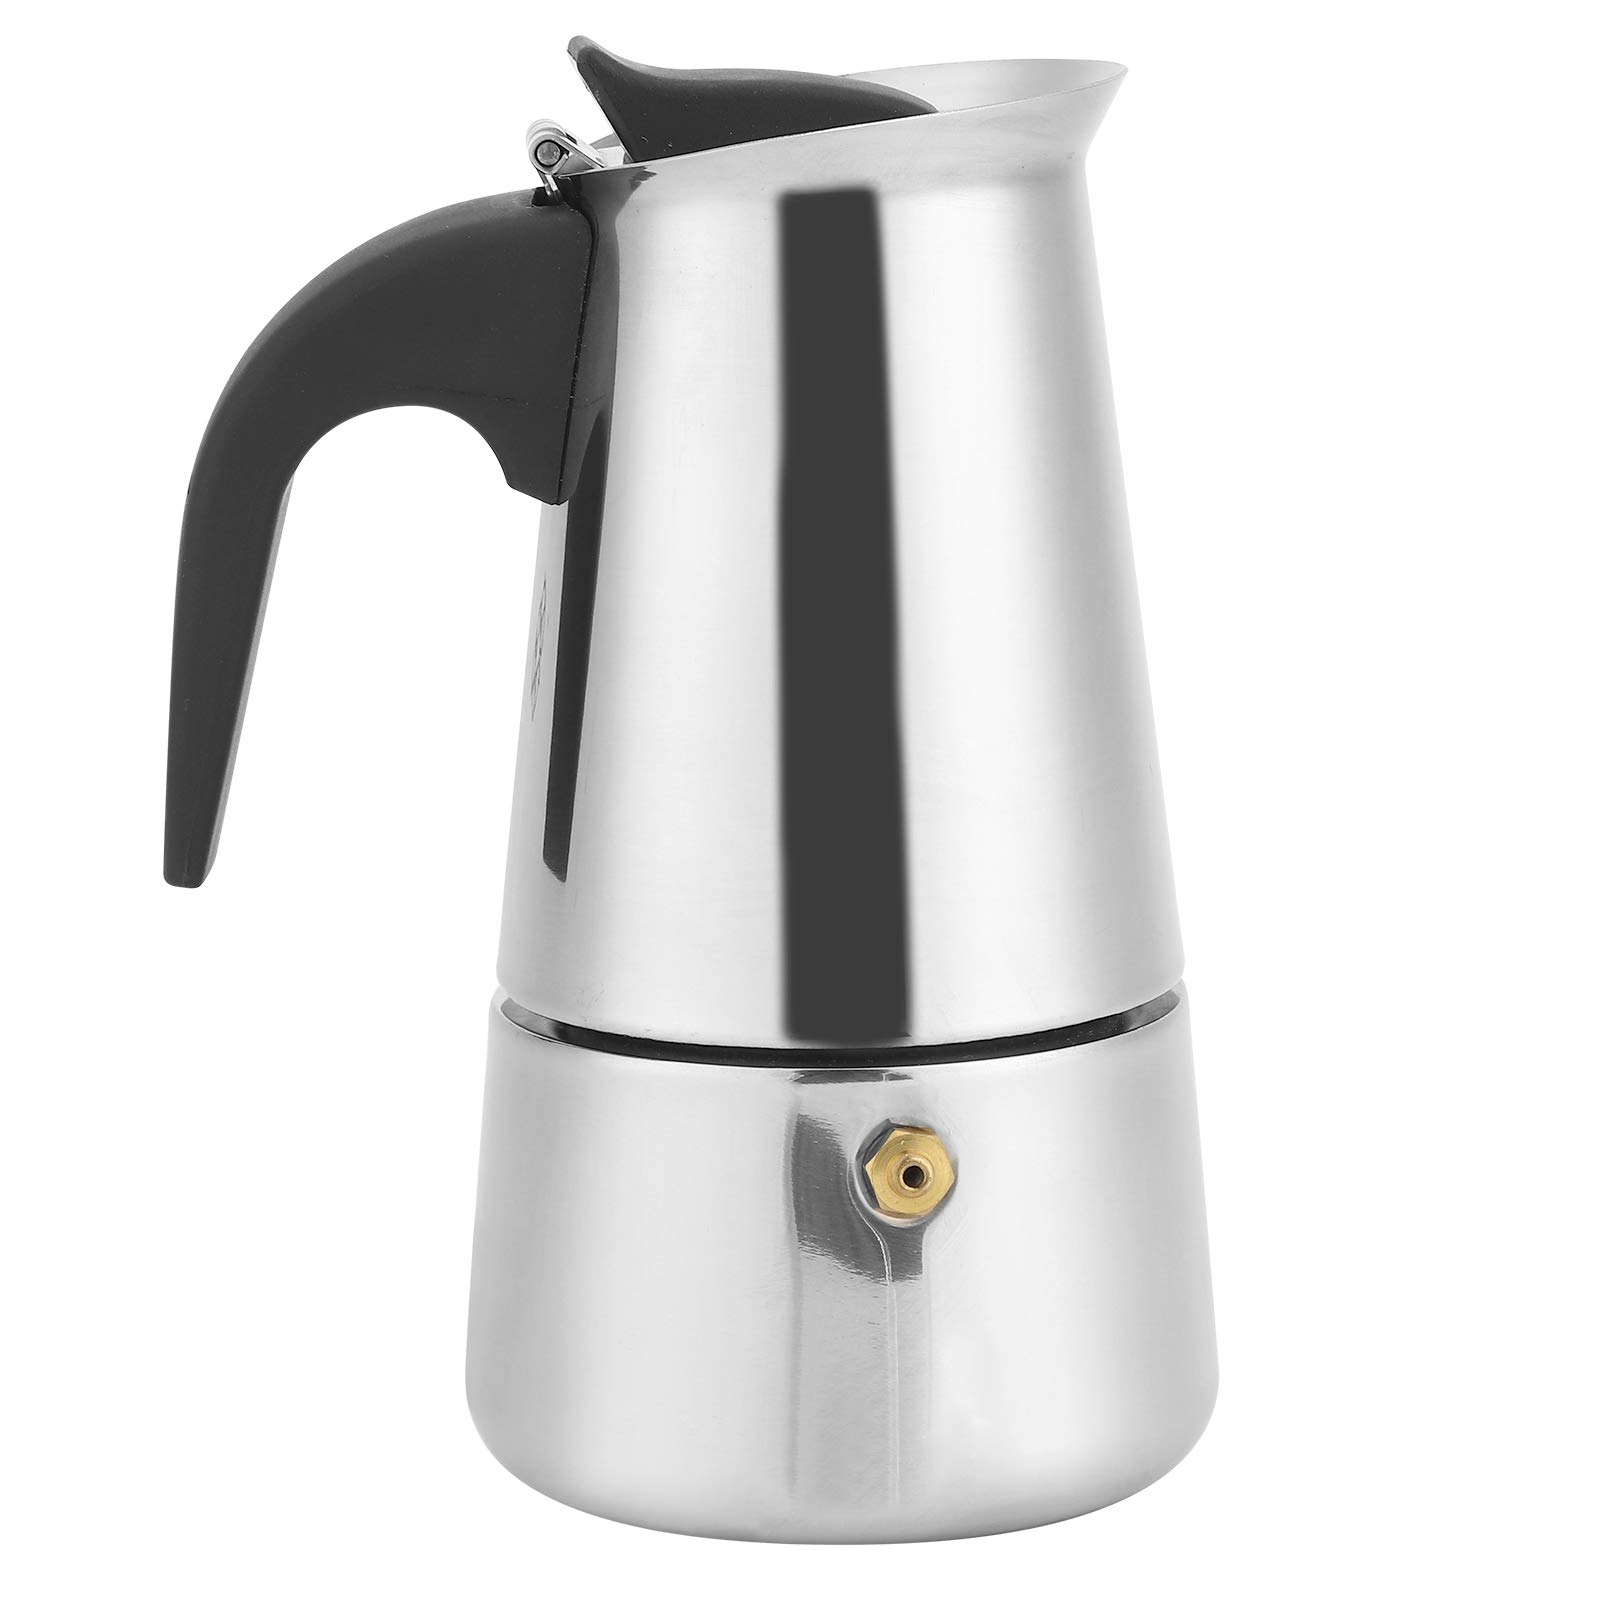 LetCart Espressokocher Induktion geeignet, Espressokocher Edelstahl, 200ml Portable Kaffeemaschine Moka Pot Edelstahl Kaffeekessel Topf für Haus Küche Supplie